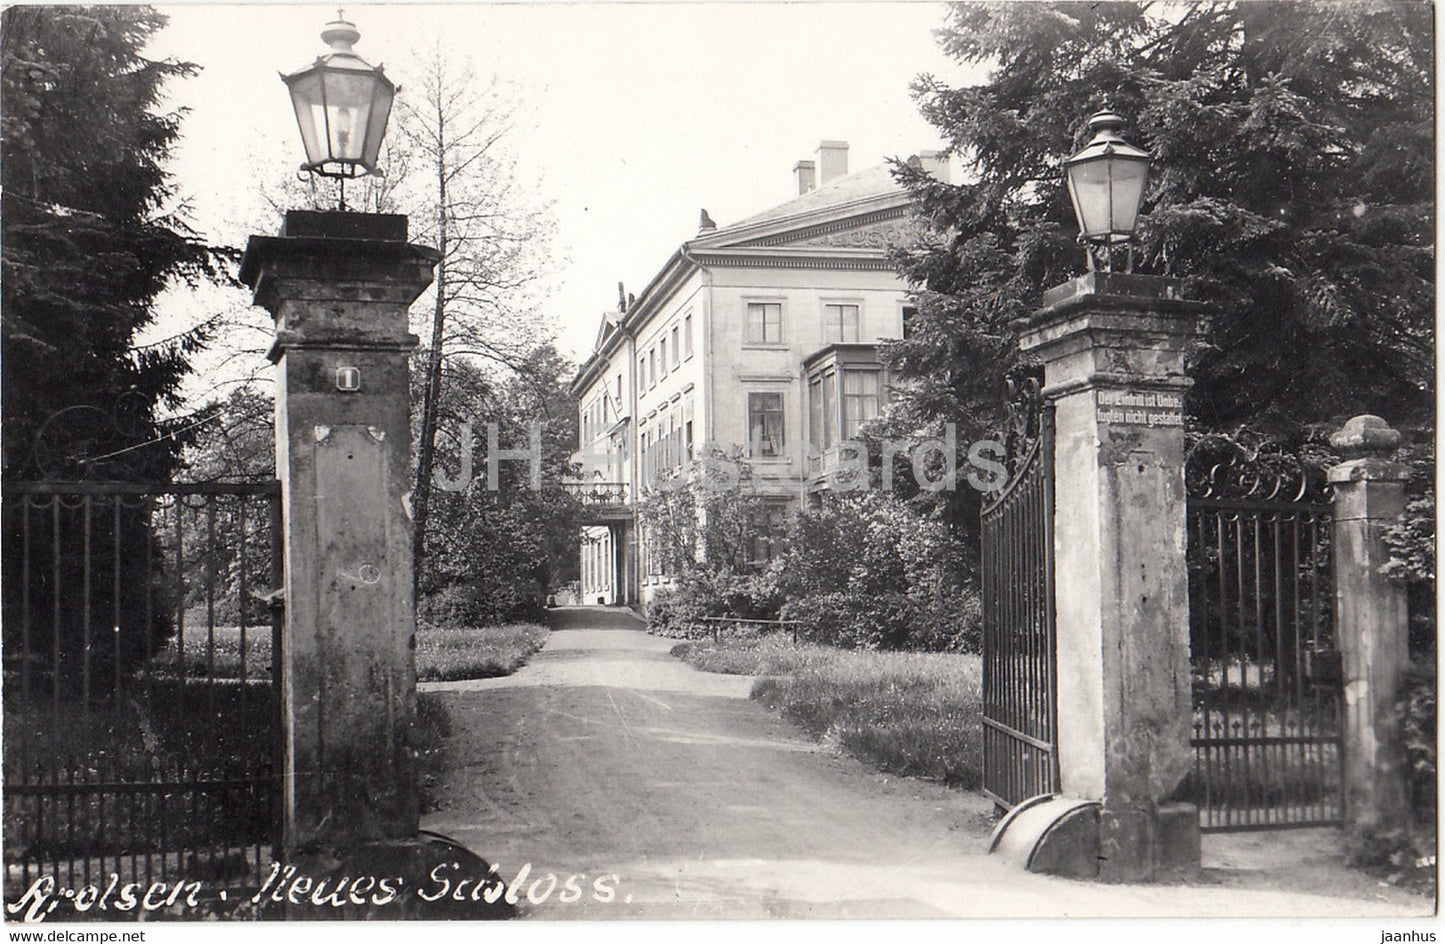 Arolsen - Neues Schloss - castle - Germany - unused - JH Postcards